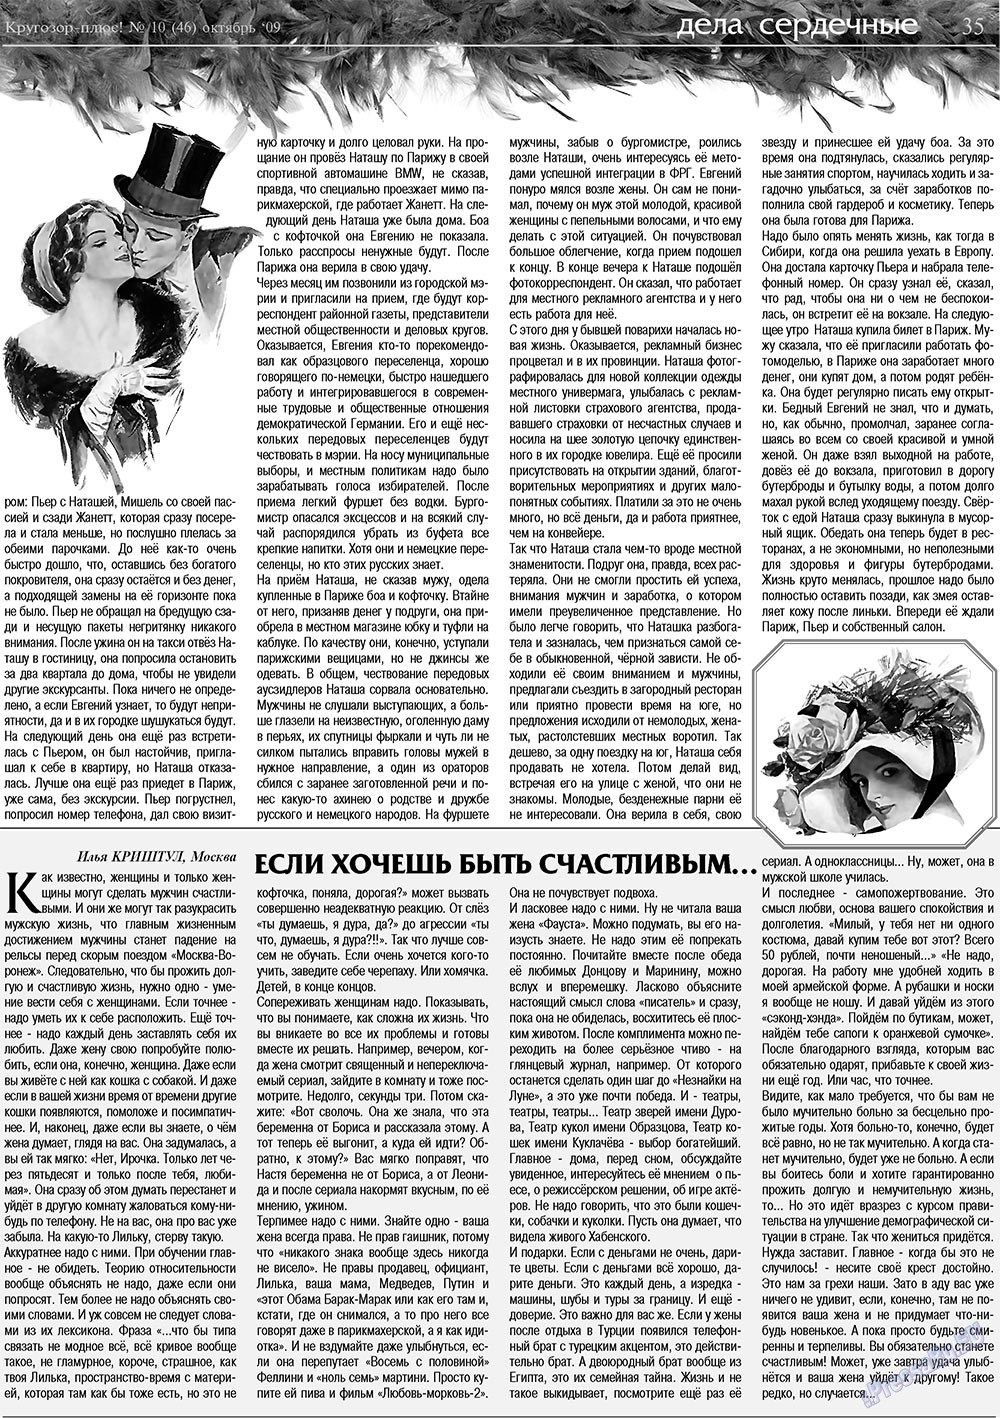 Кругозор плюс! (газета). 2009 год, номер 10, стр. 35